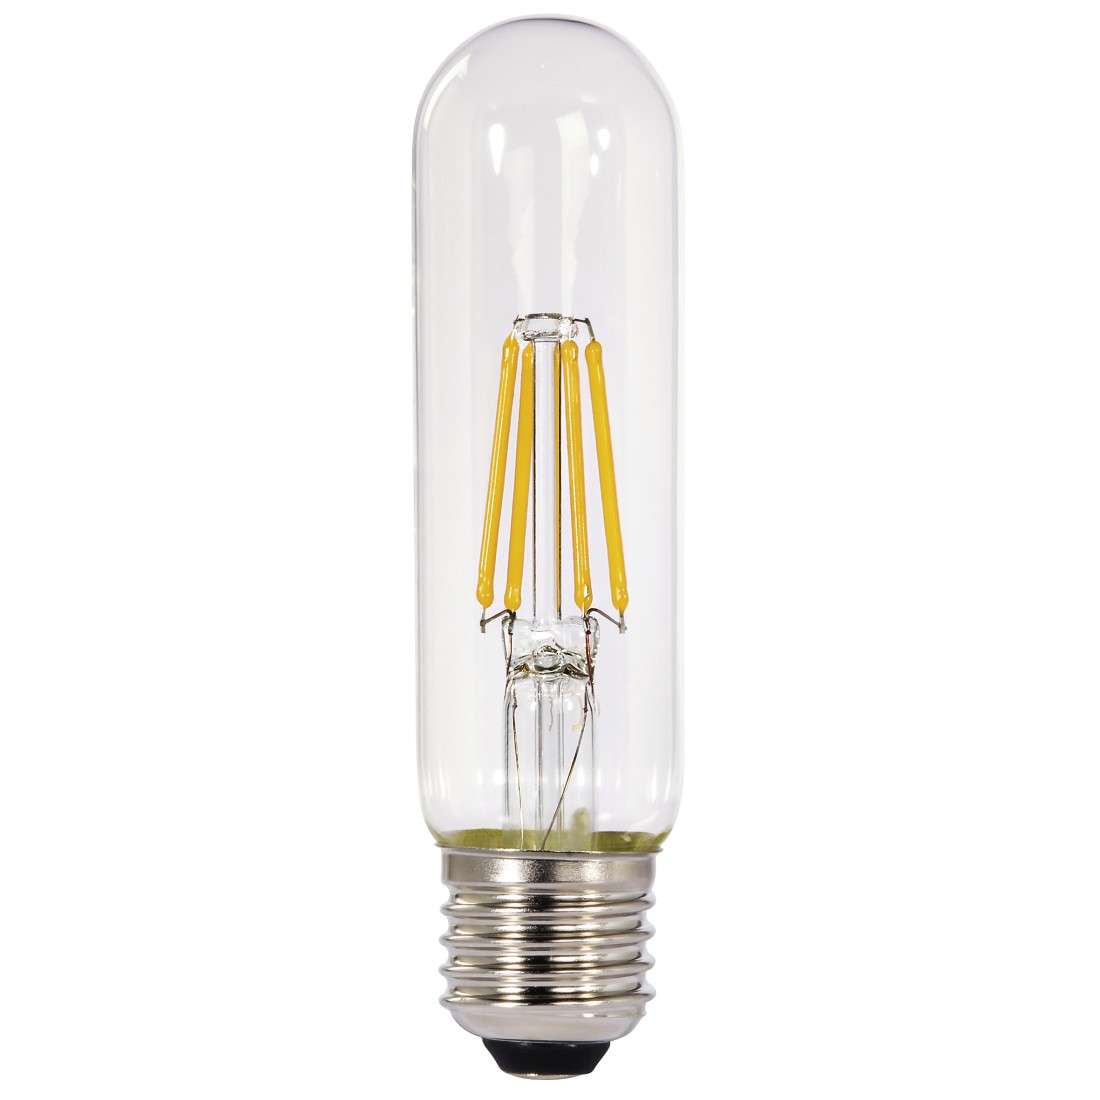 LED-Filament, E27, 470lm ersetzt 40W, T32 Röhrenlampe, Warmweiß, dimmbar